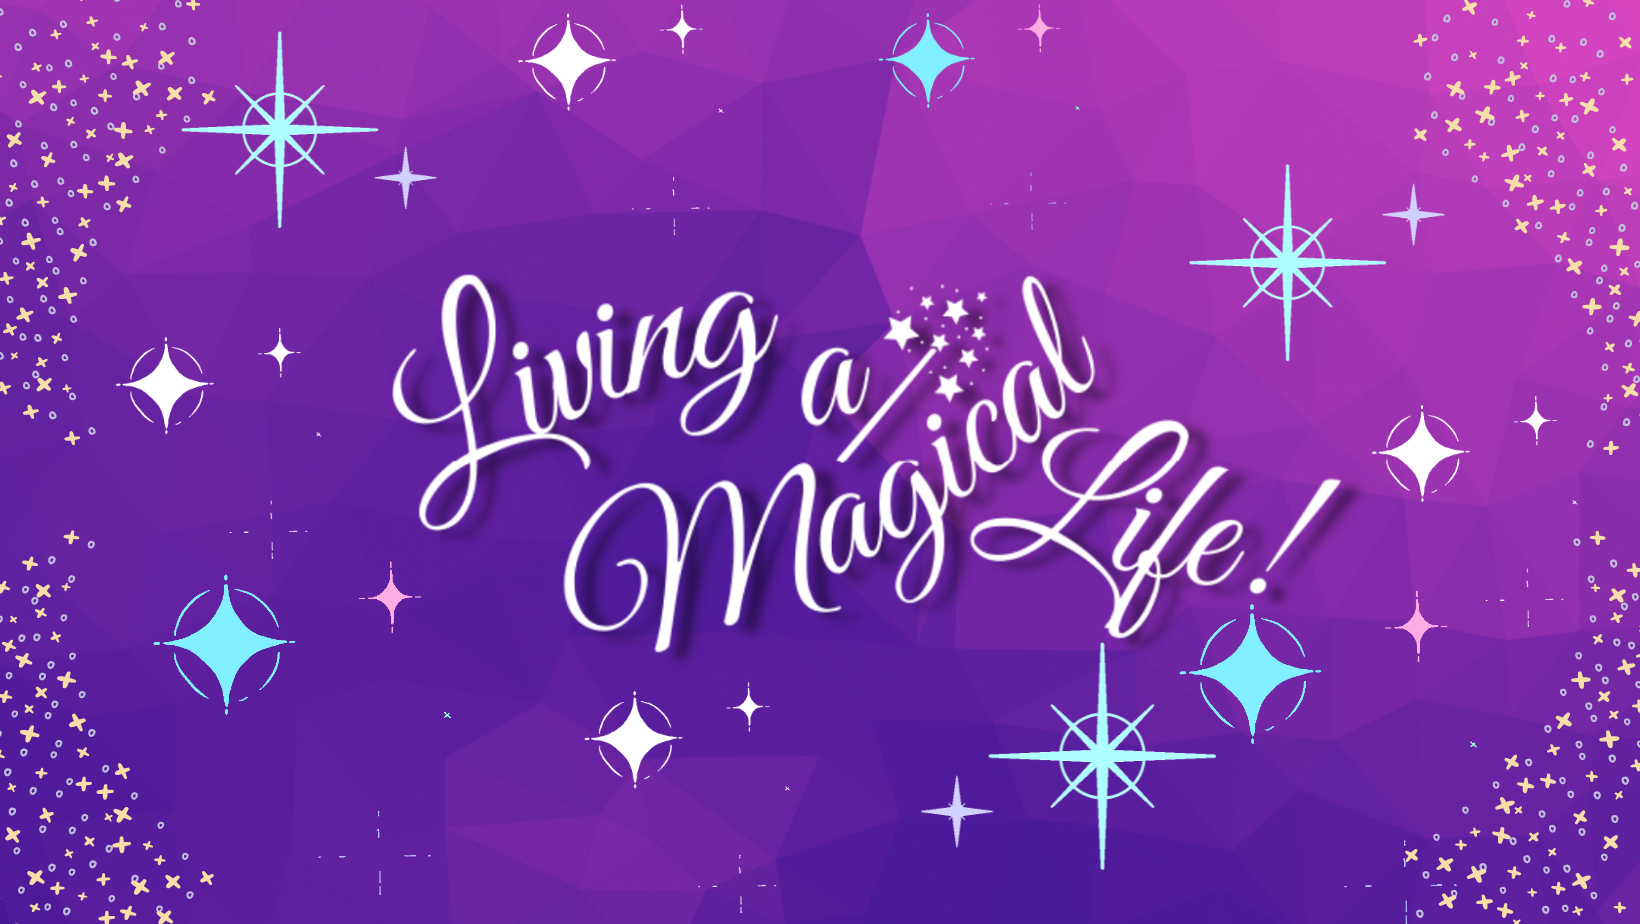 Honey Wesley - Living a Magical Life!